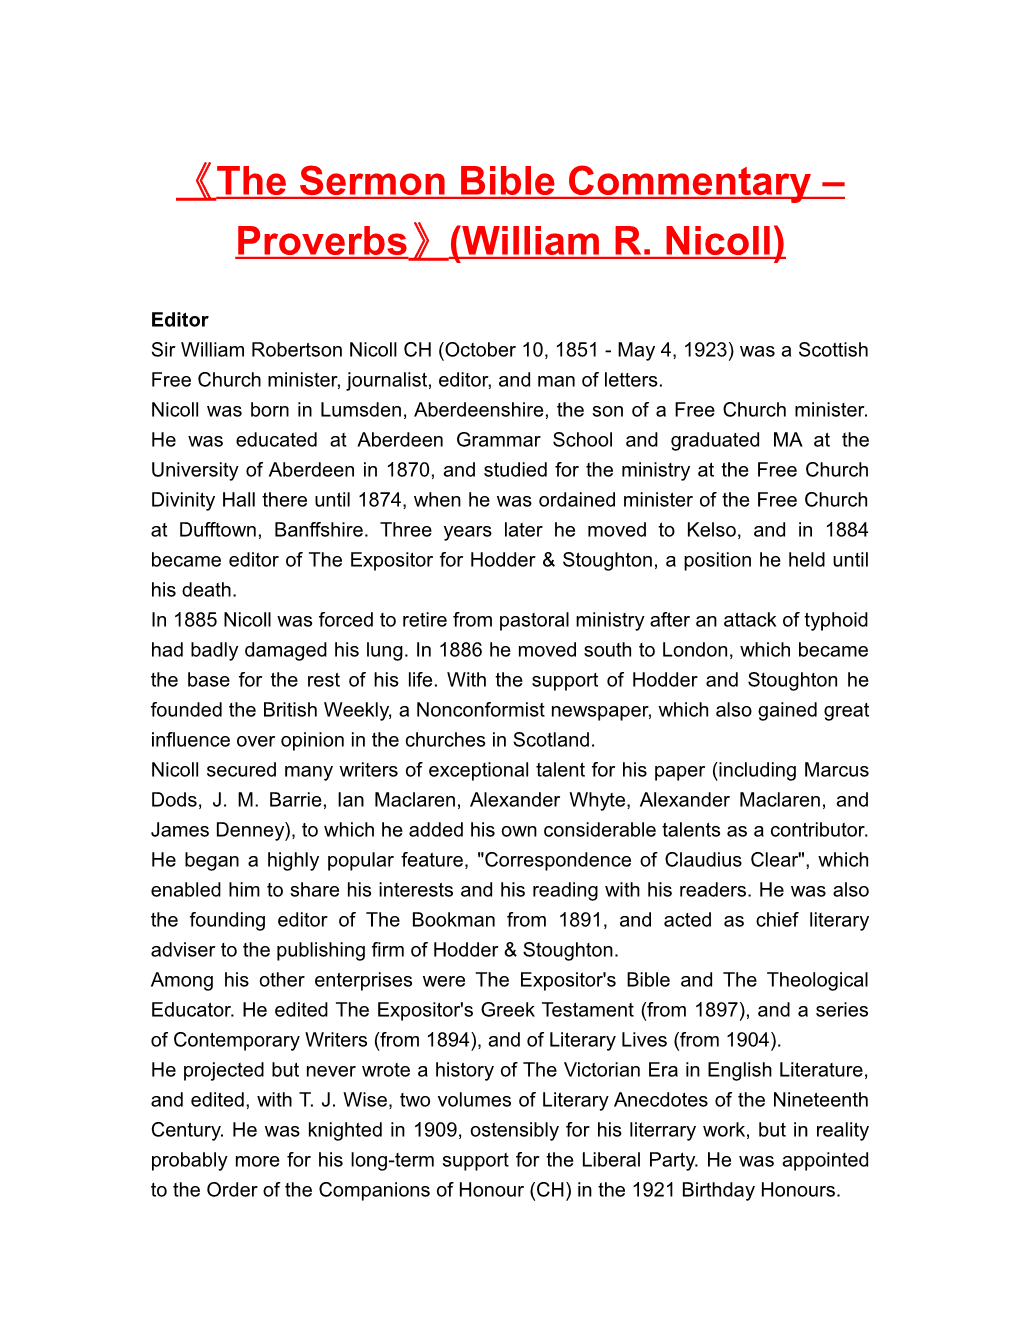 The Sermon Bible Commentary Proverbs (William R. Nicoll)